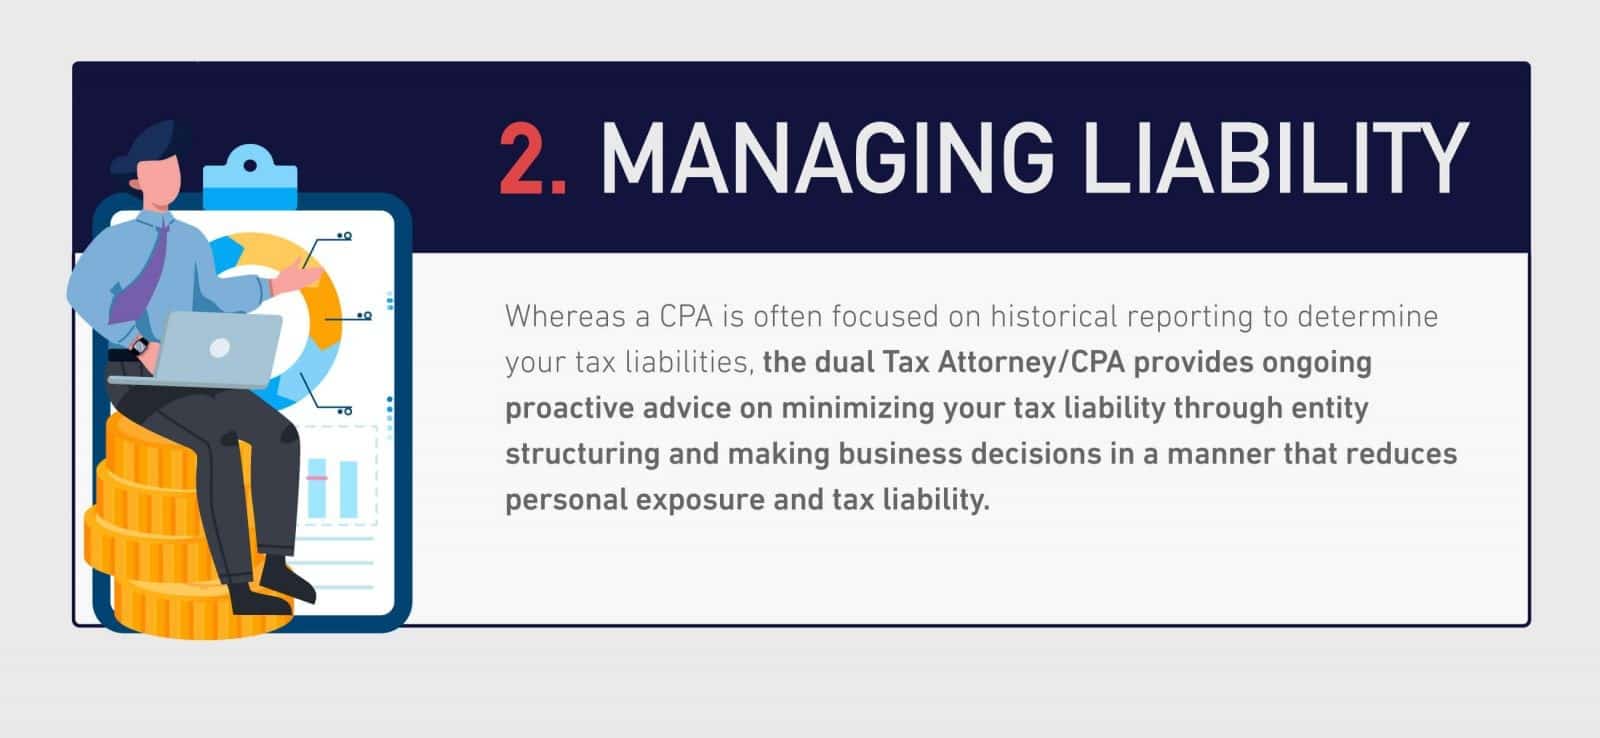 Managing-liability-klasing-associates-irs-tax-audit-attorneys